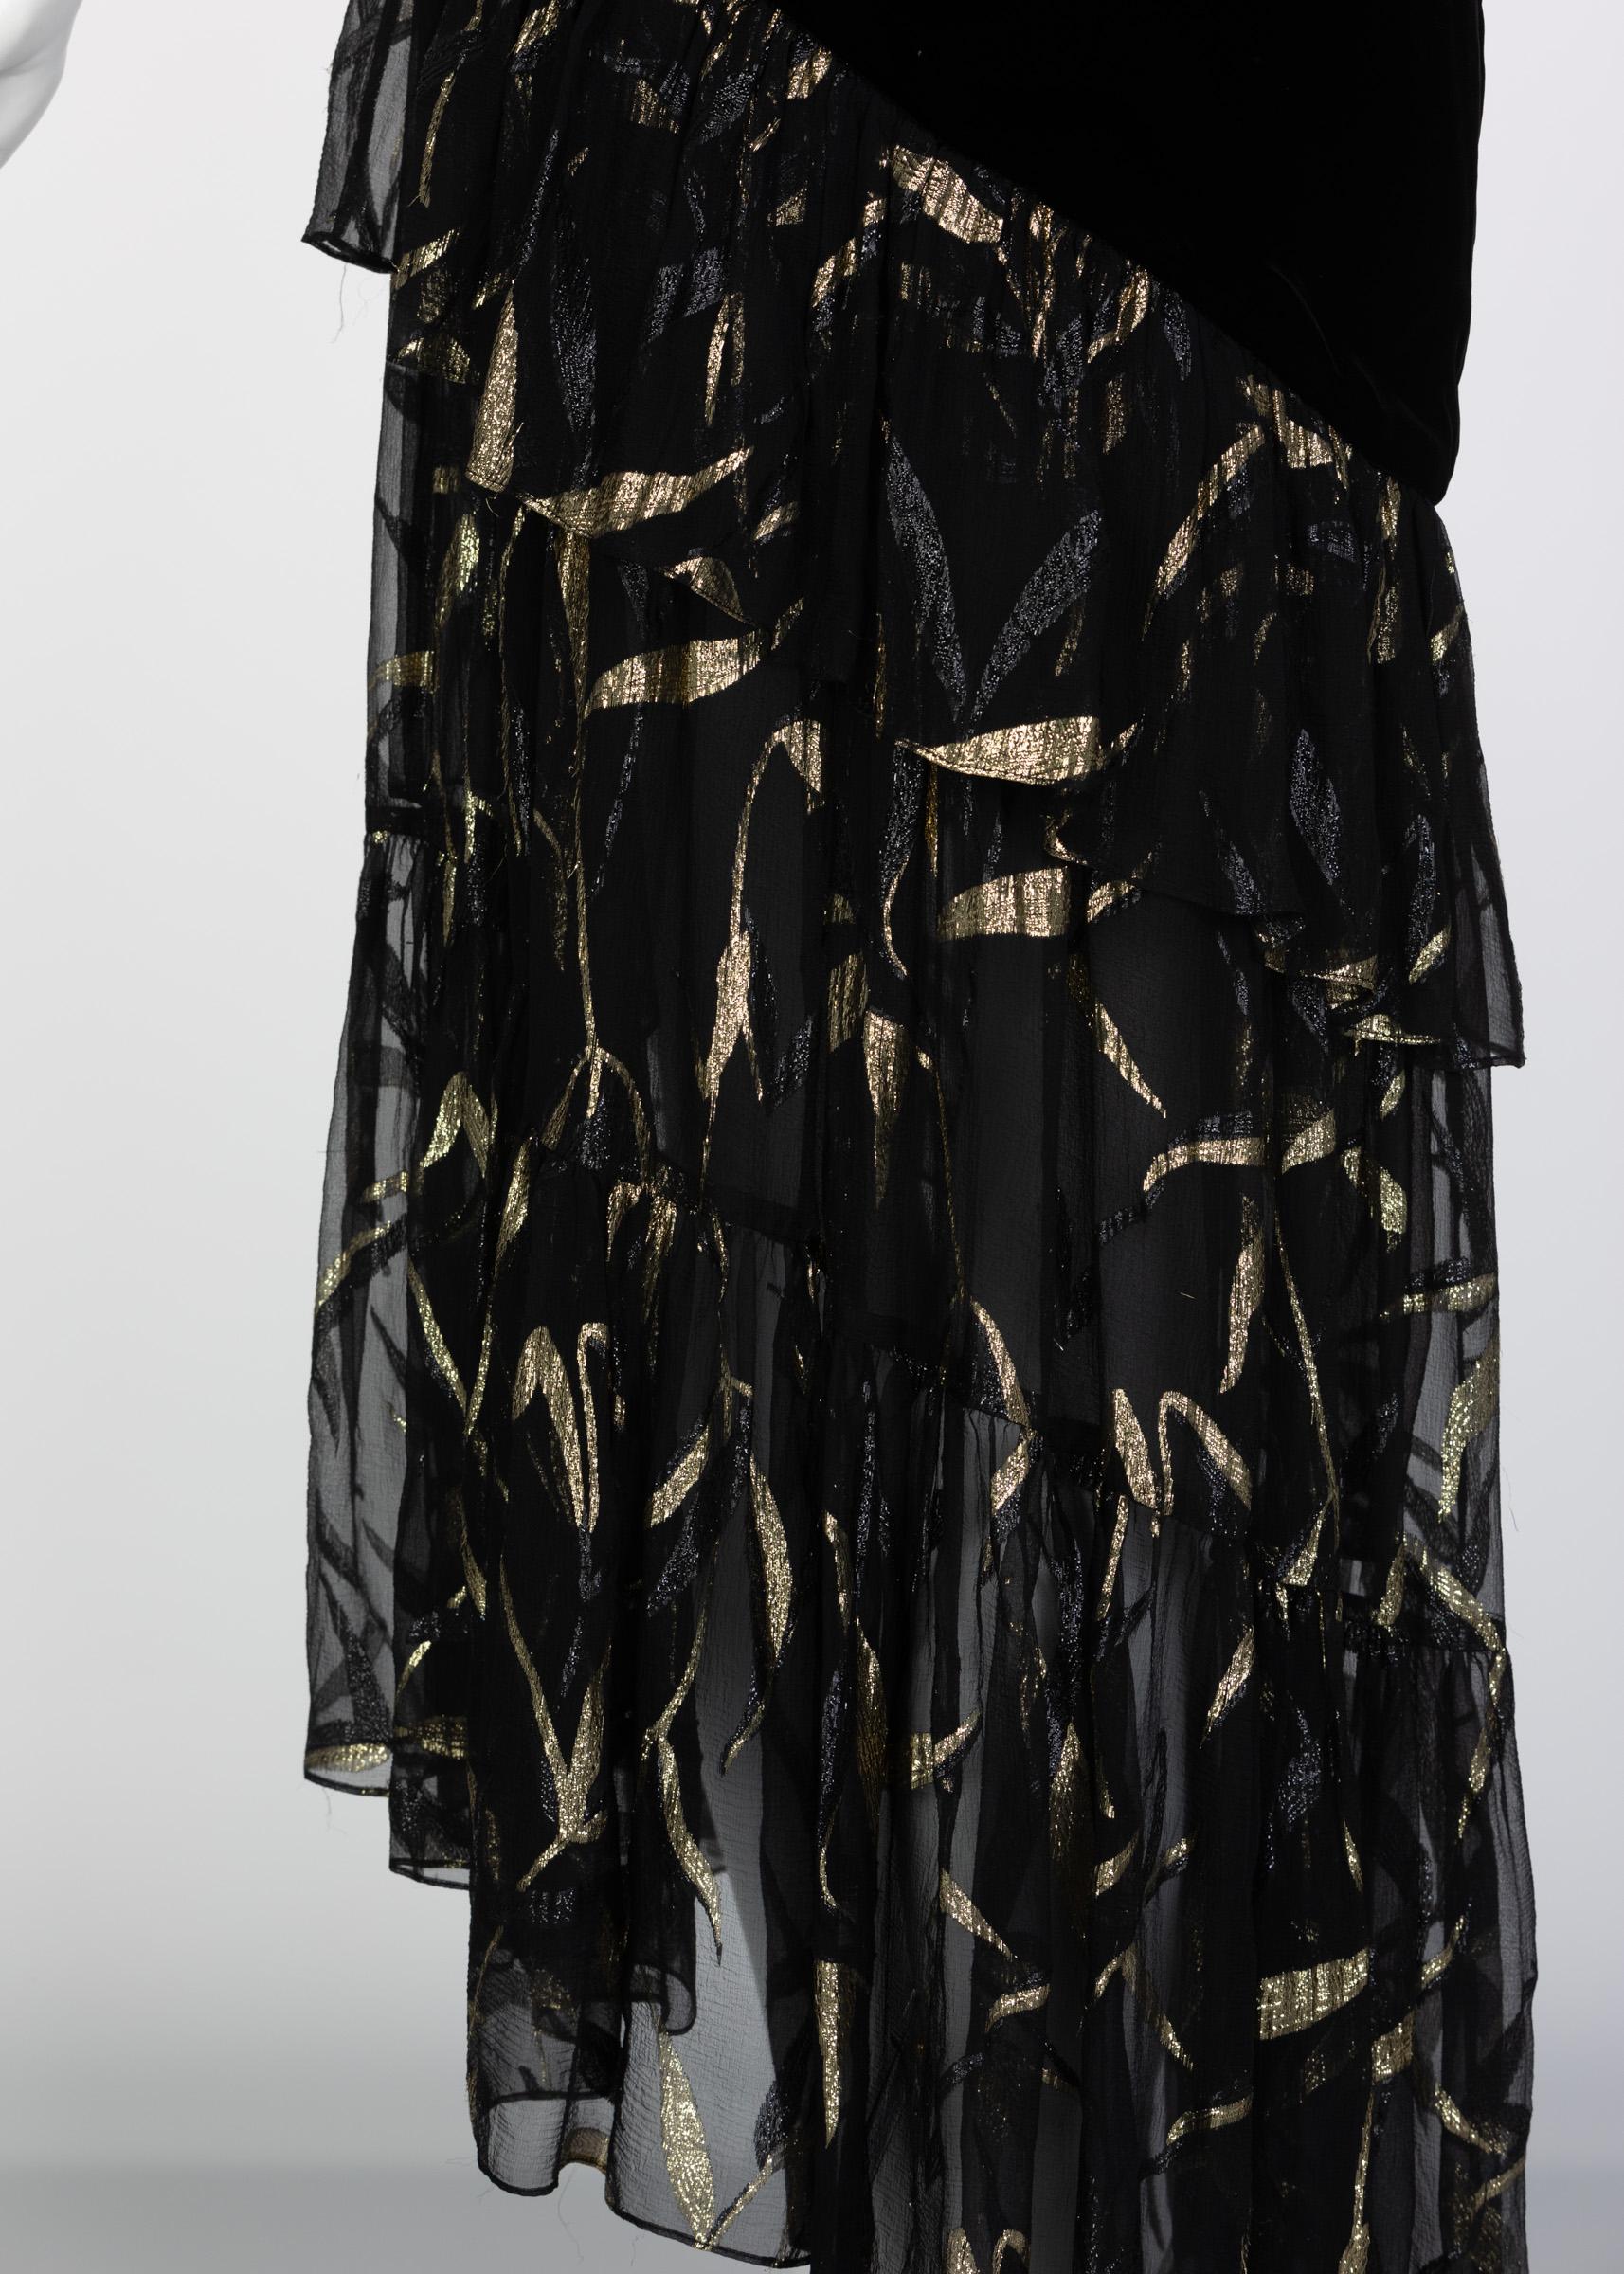 Saint Laurent YSL One shoulder Black Velvet Metallic Layered Dress, 1980s For Sale 4